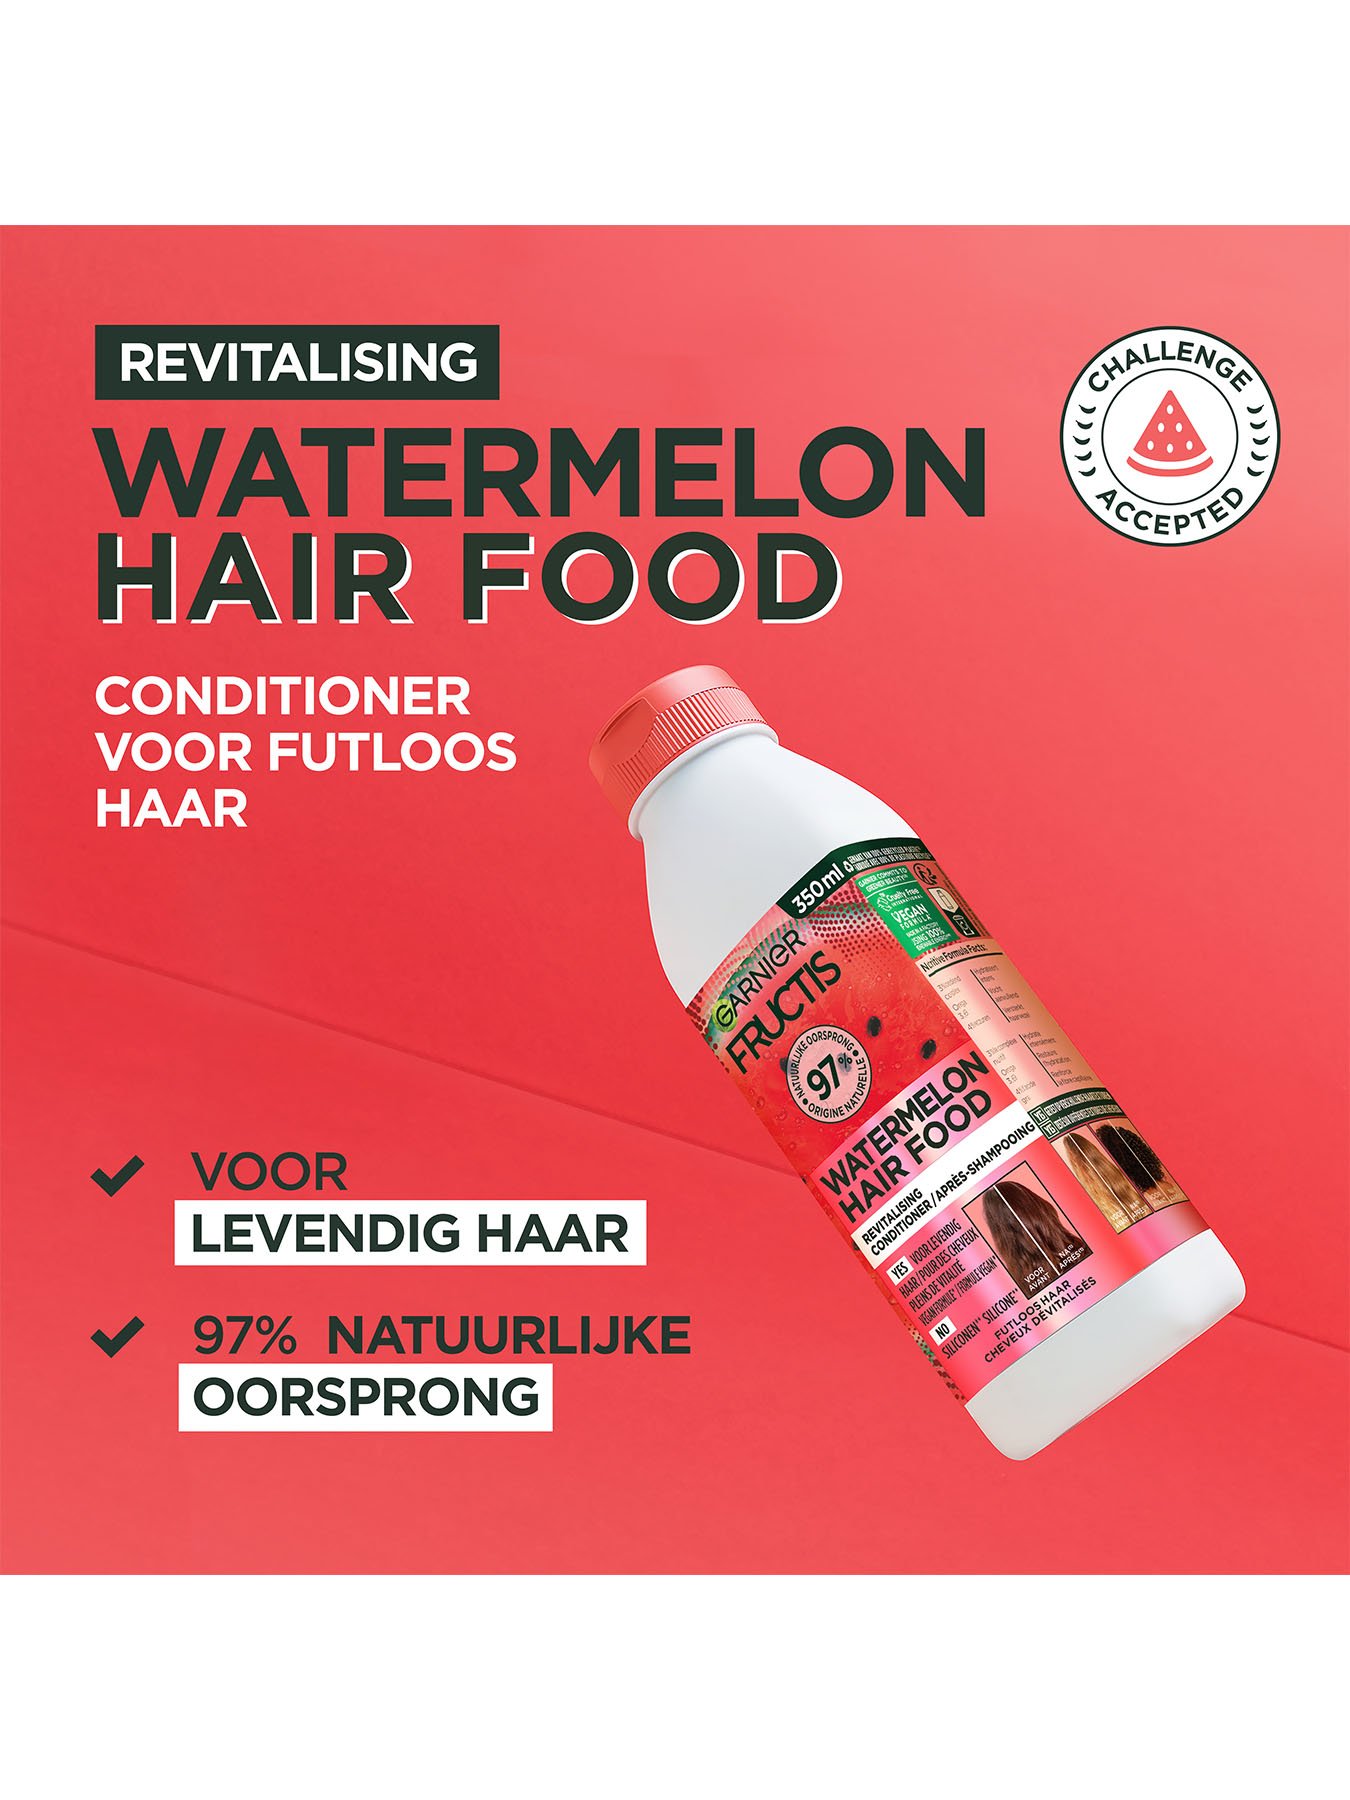 garnier ecom fructis Watermelon HairFoodConditioner 28Jun23 Benefits 1x1 NLjpg master